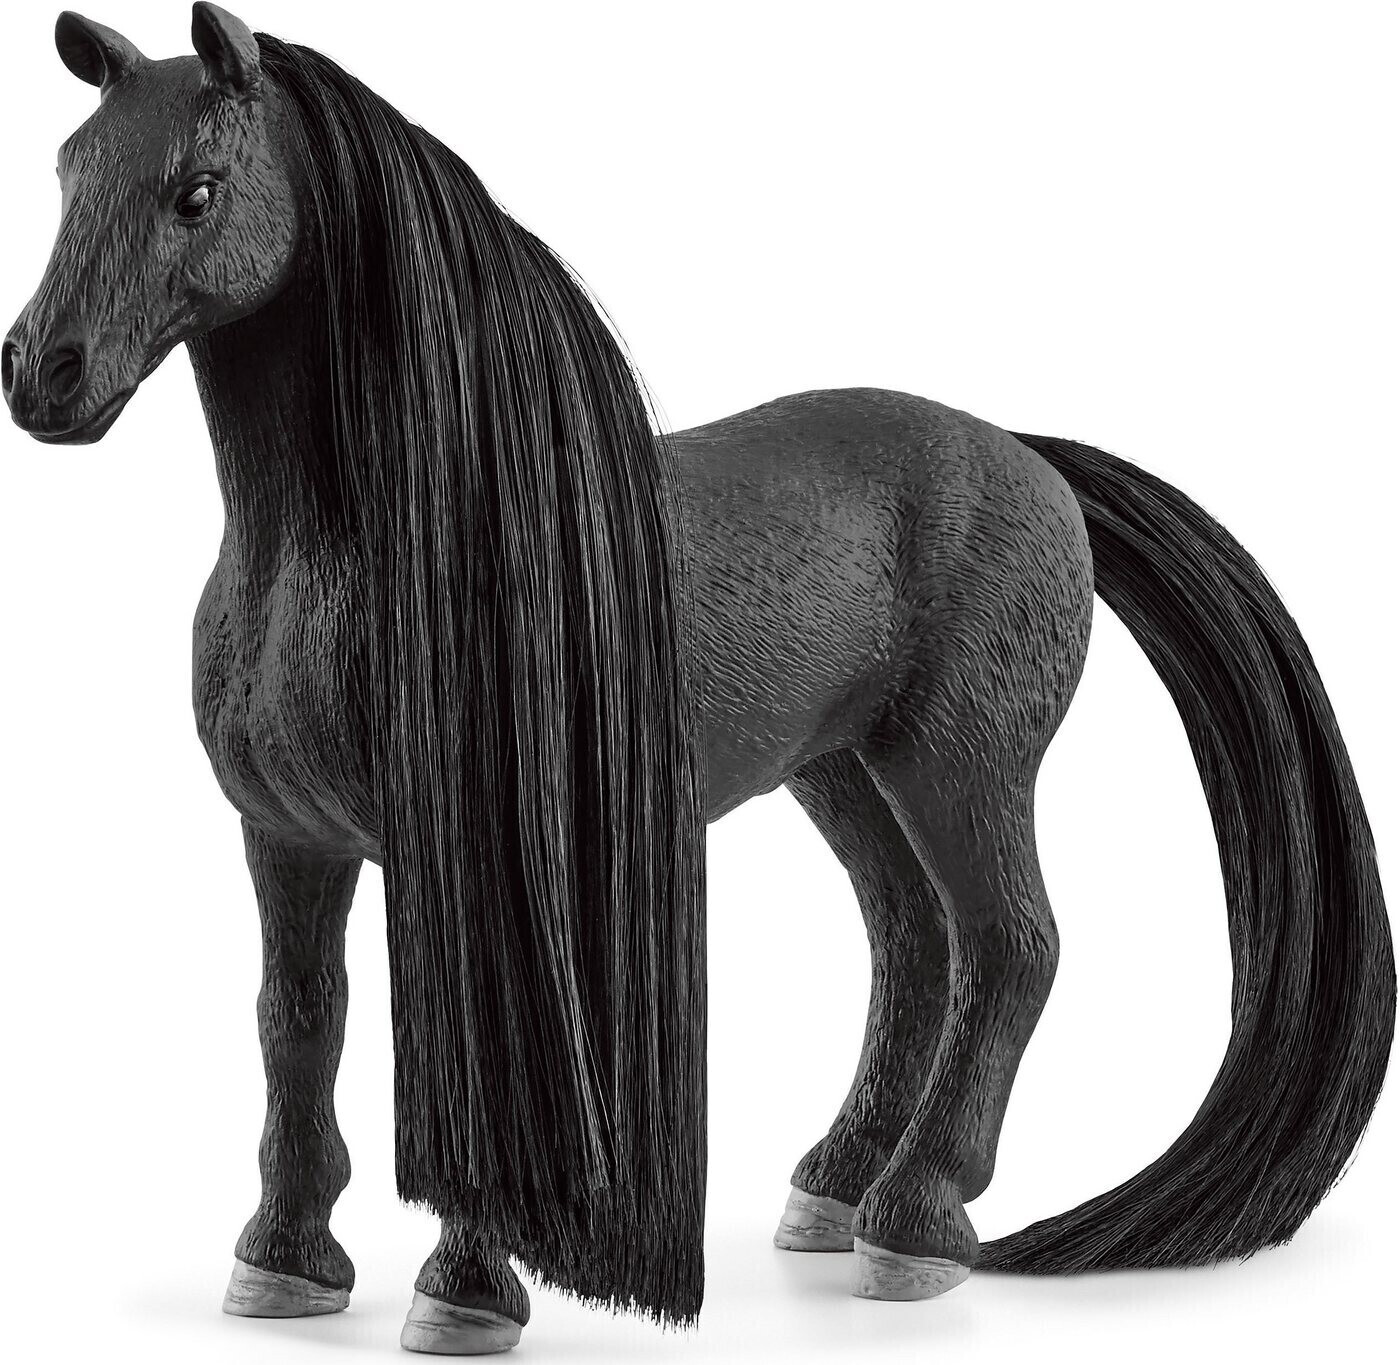 schleich® Figurine coffret cheval à coiffer Kim & Caramelo Sofia's Beauties  42585